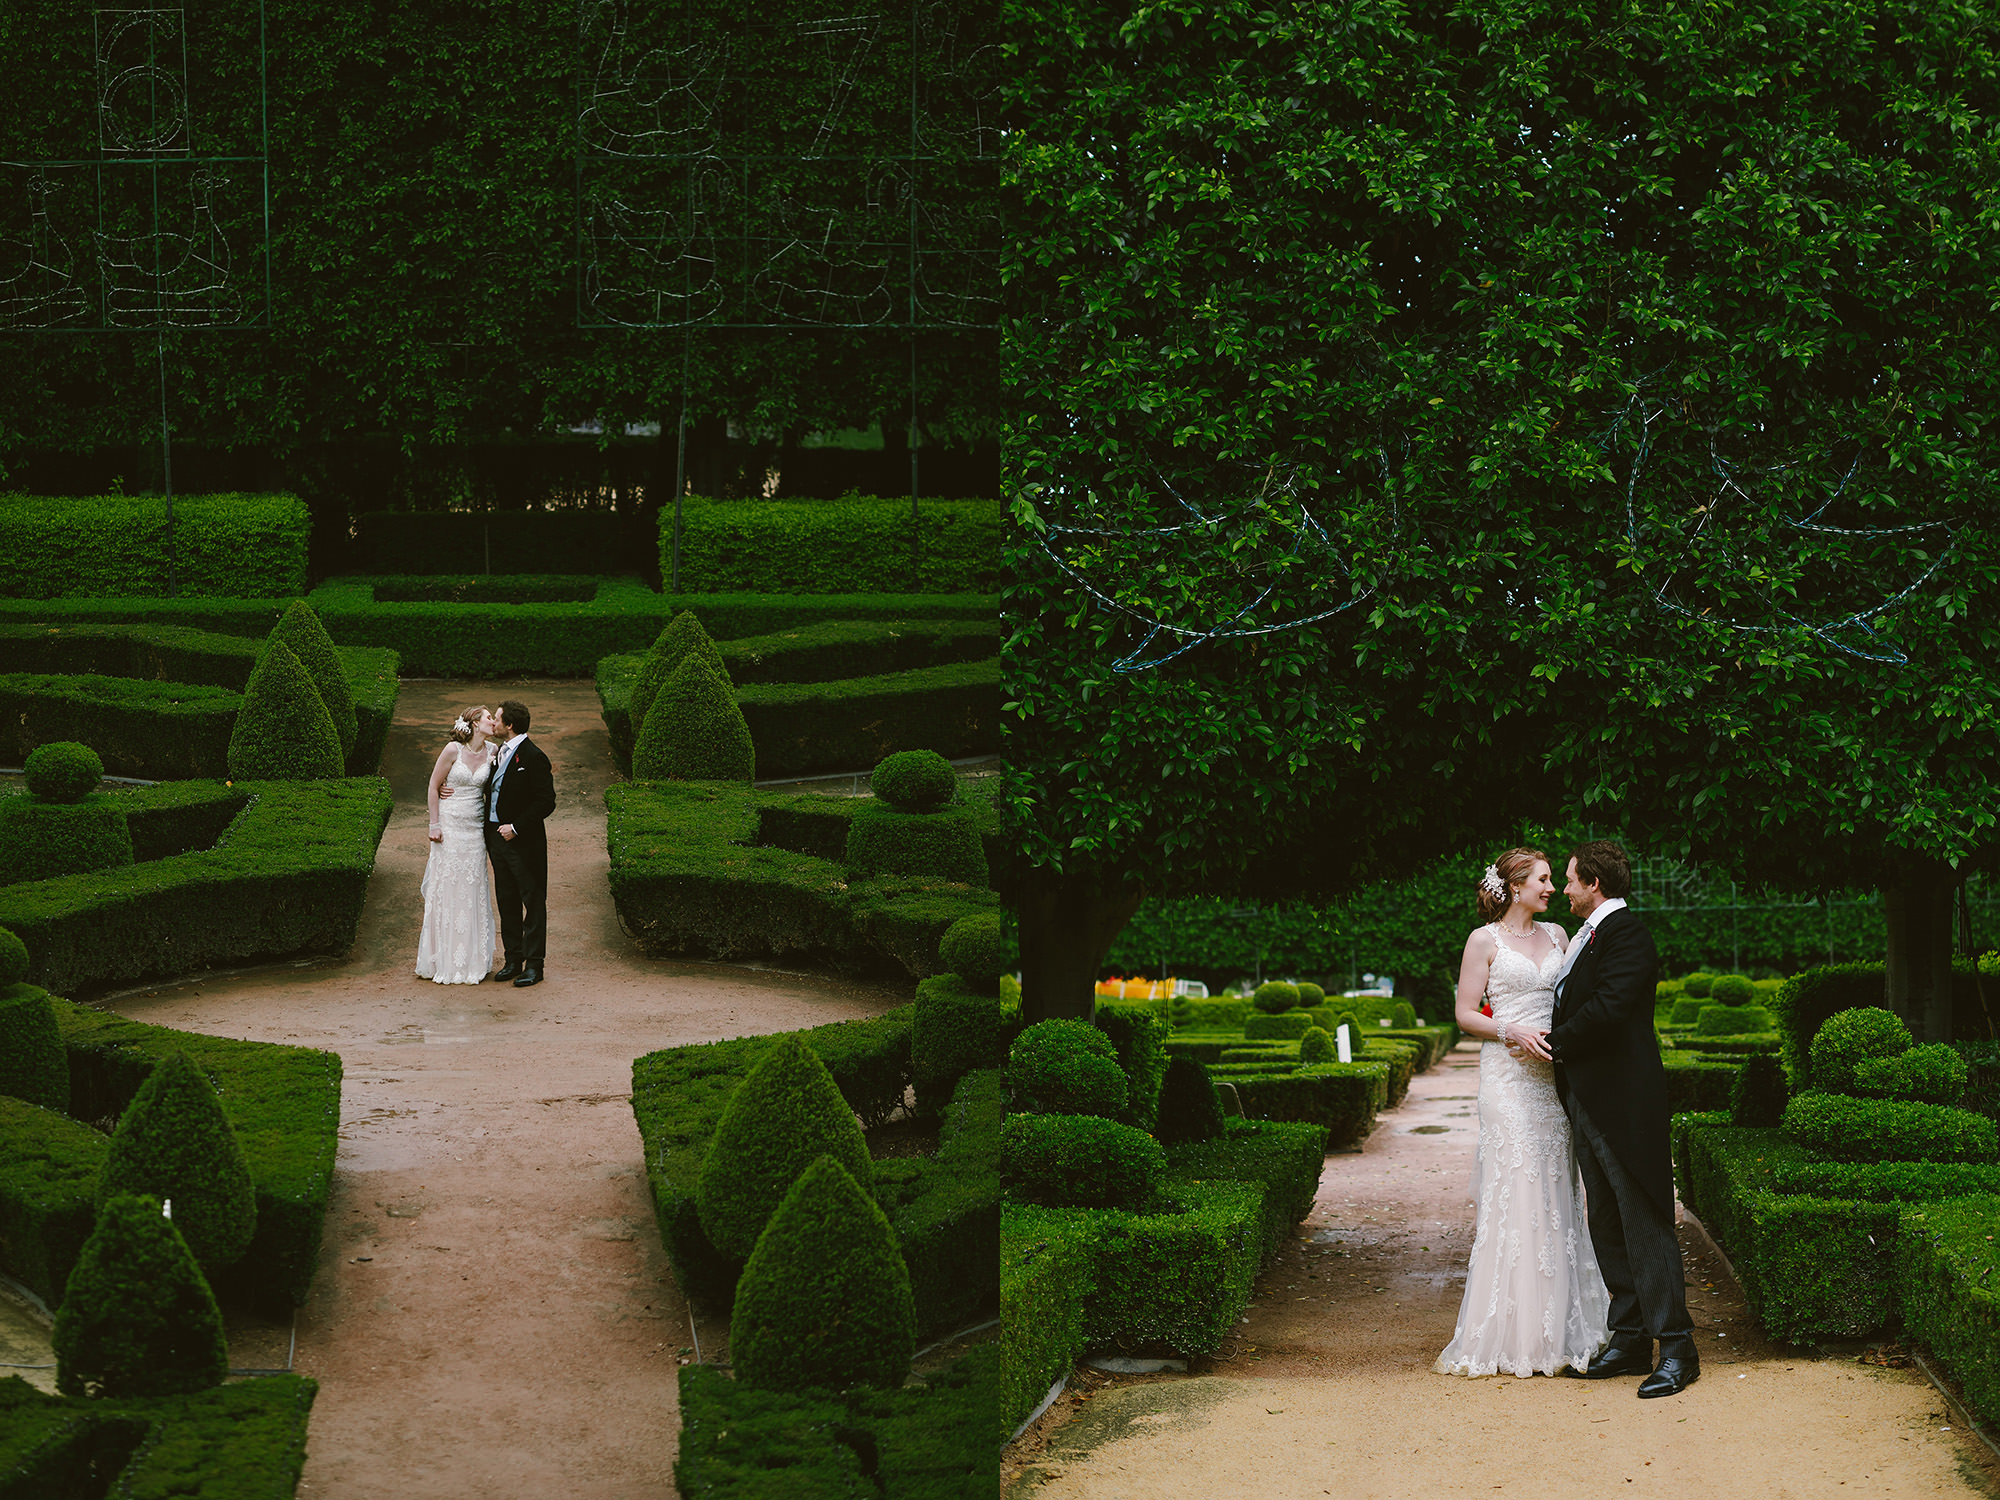 Hunter valley gardens wedding